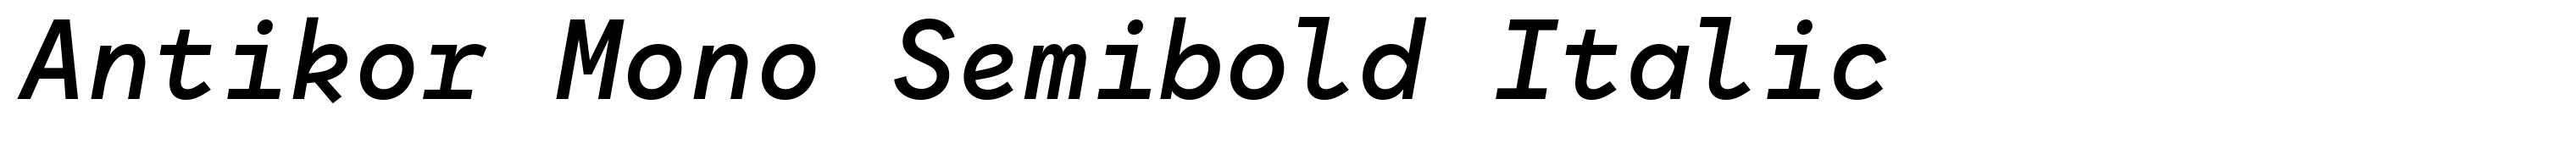 Antikor Mono Semibold Italic